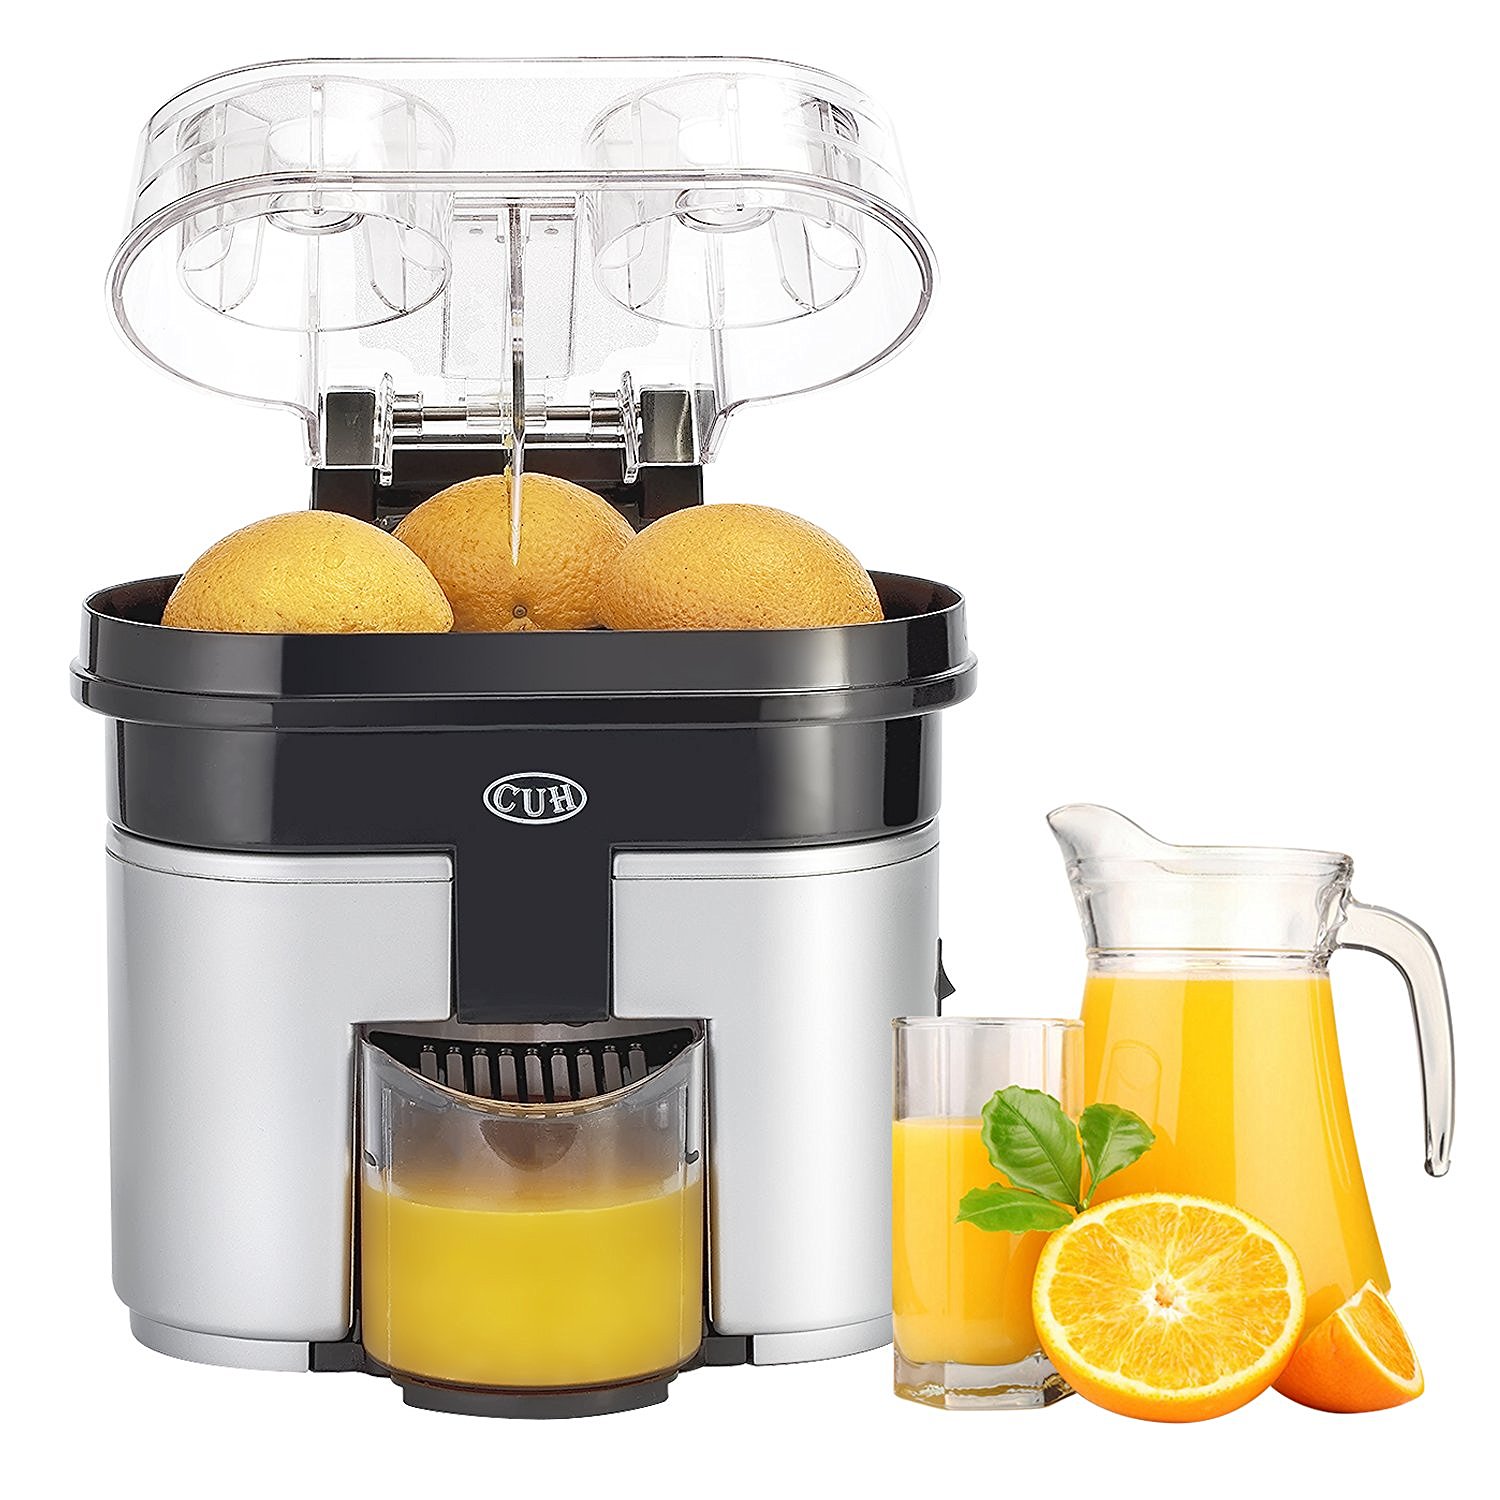 How To Make Orange Juice In A Juicer